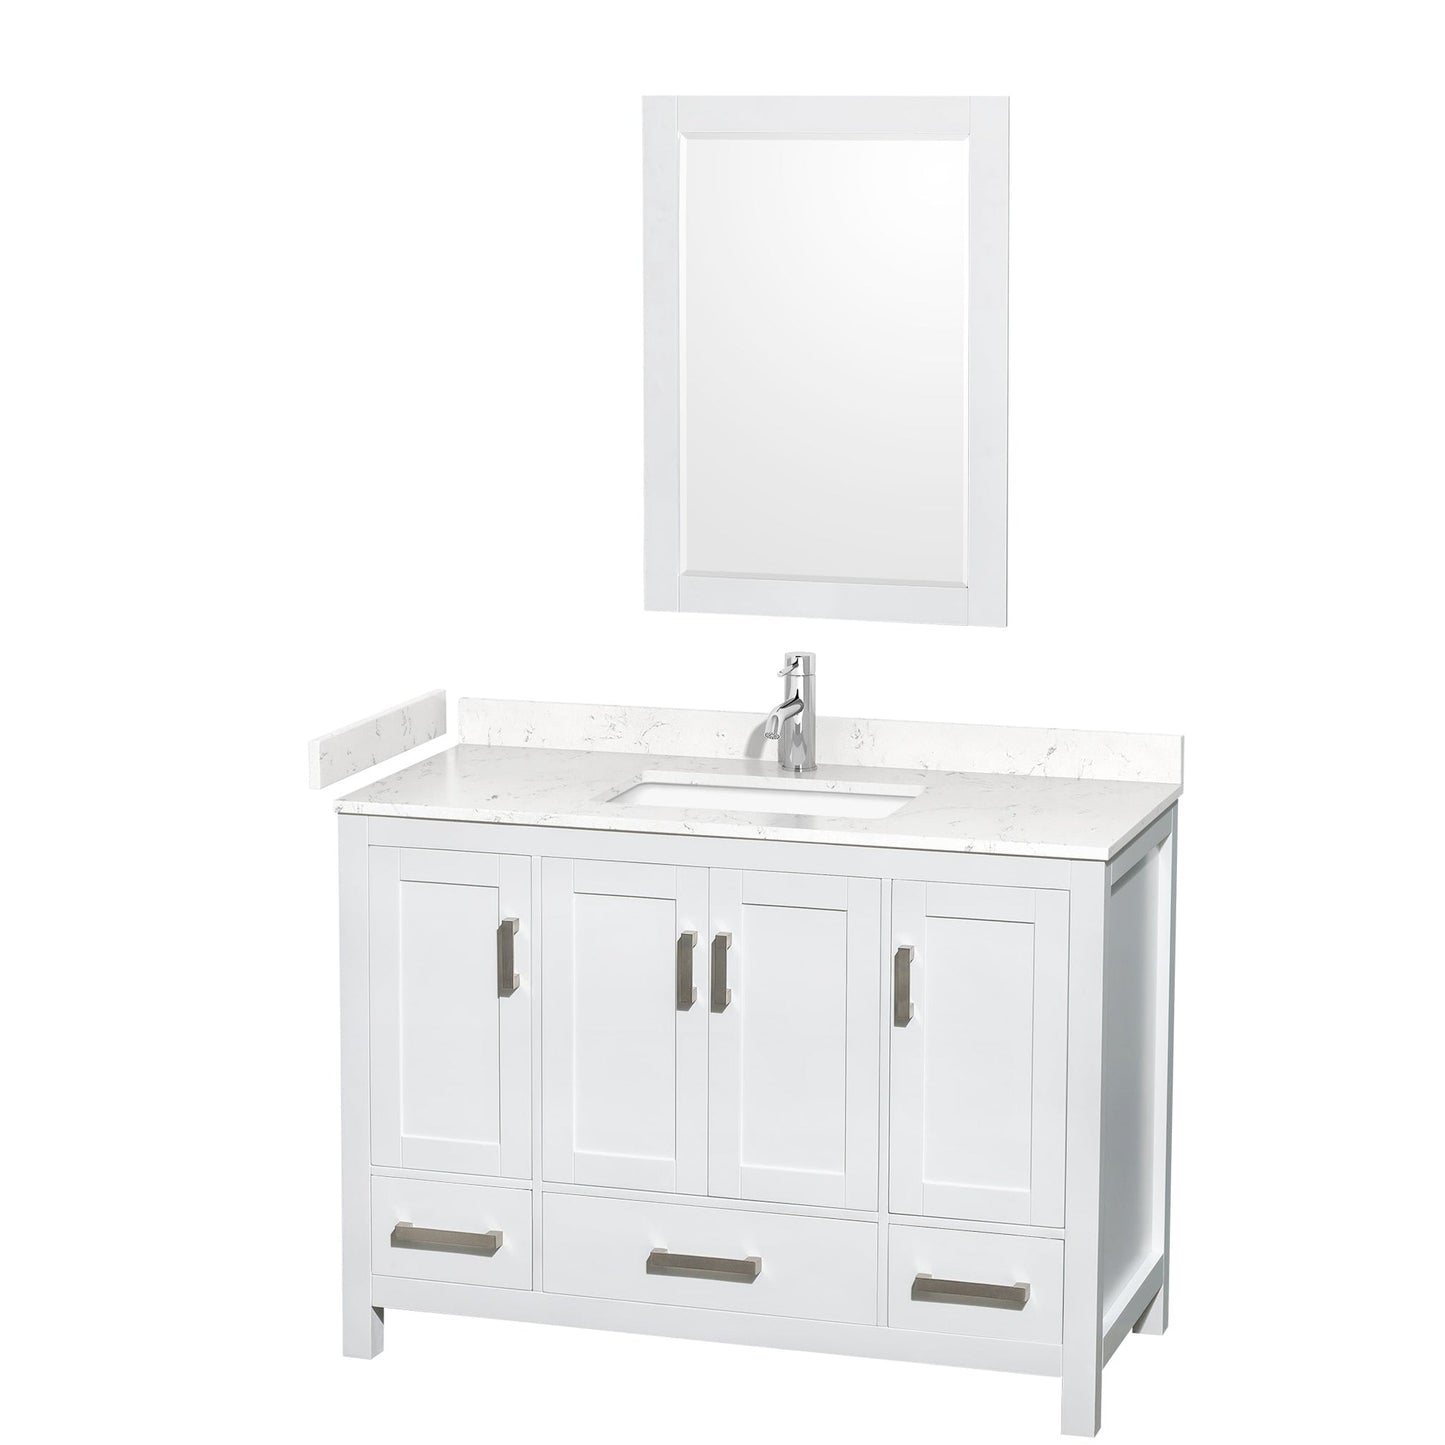 Wyndham Collection Sheffield 48" Single Bathroom Vanity in White, Carrara Cultured Marble Countertop, Undermount Square Sink, 24" Mirror